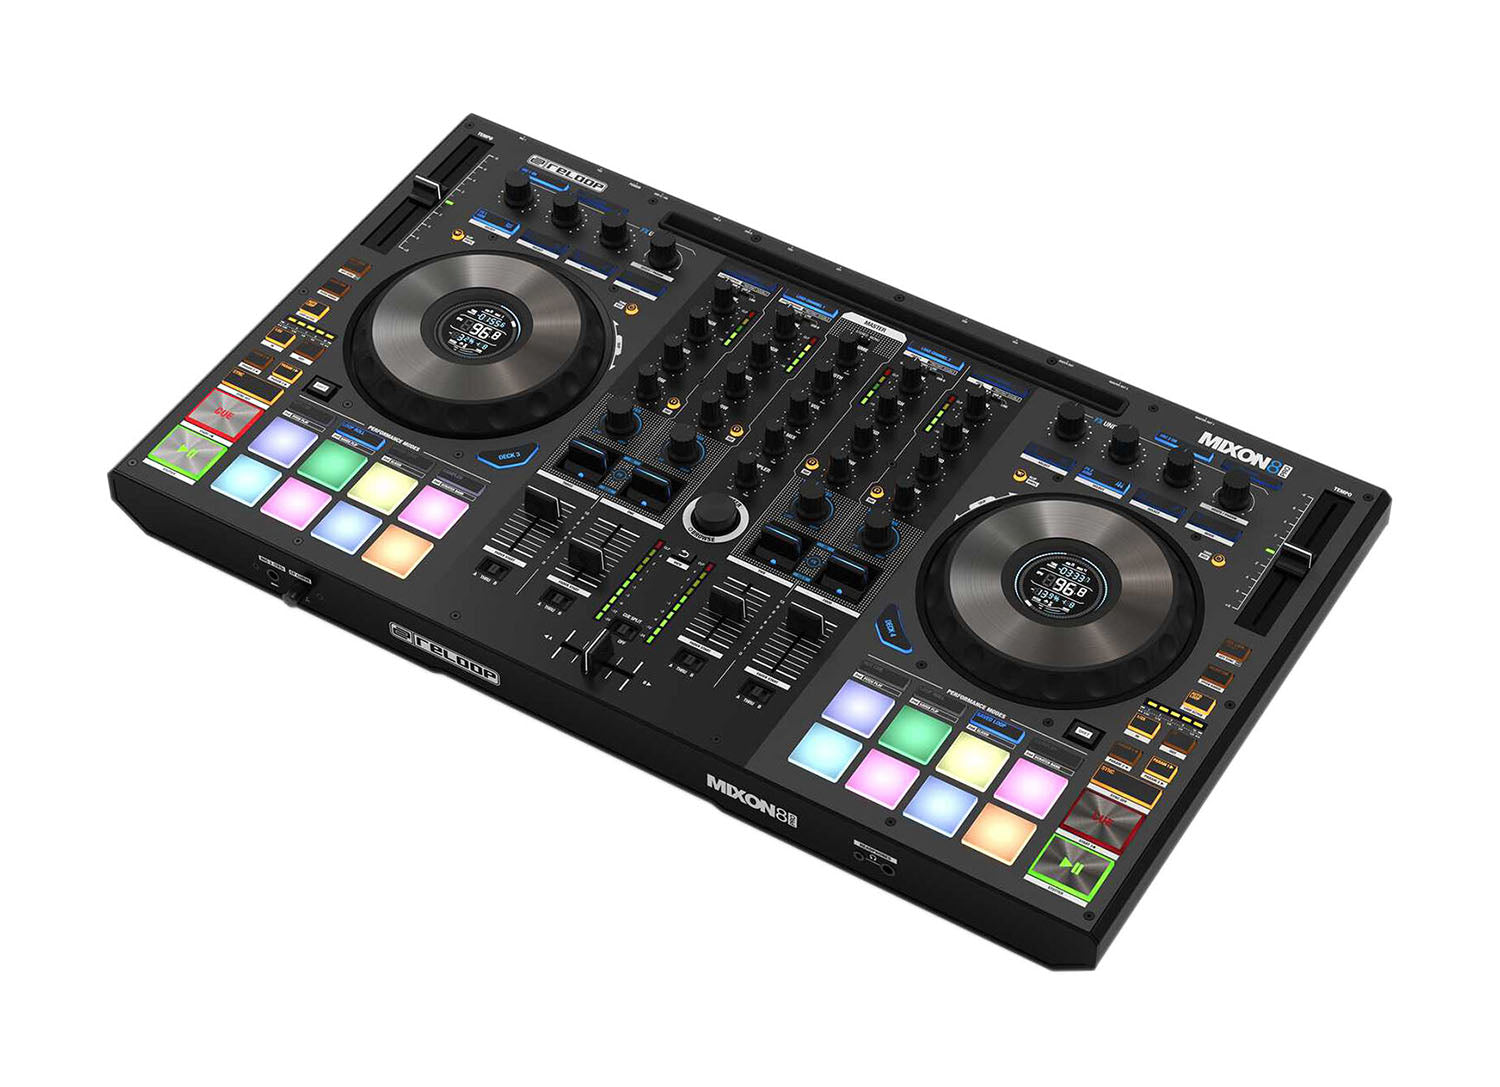 B-Stock: Reloop Mixon 8 Pro 4-channel DJ Controller - Hollywood DJ